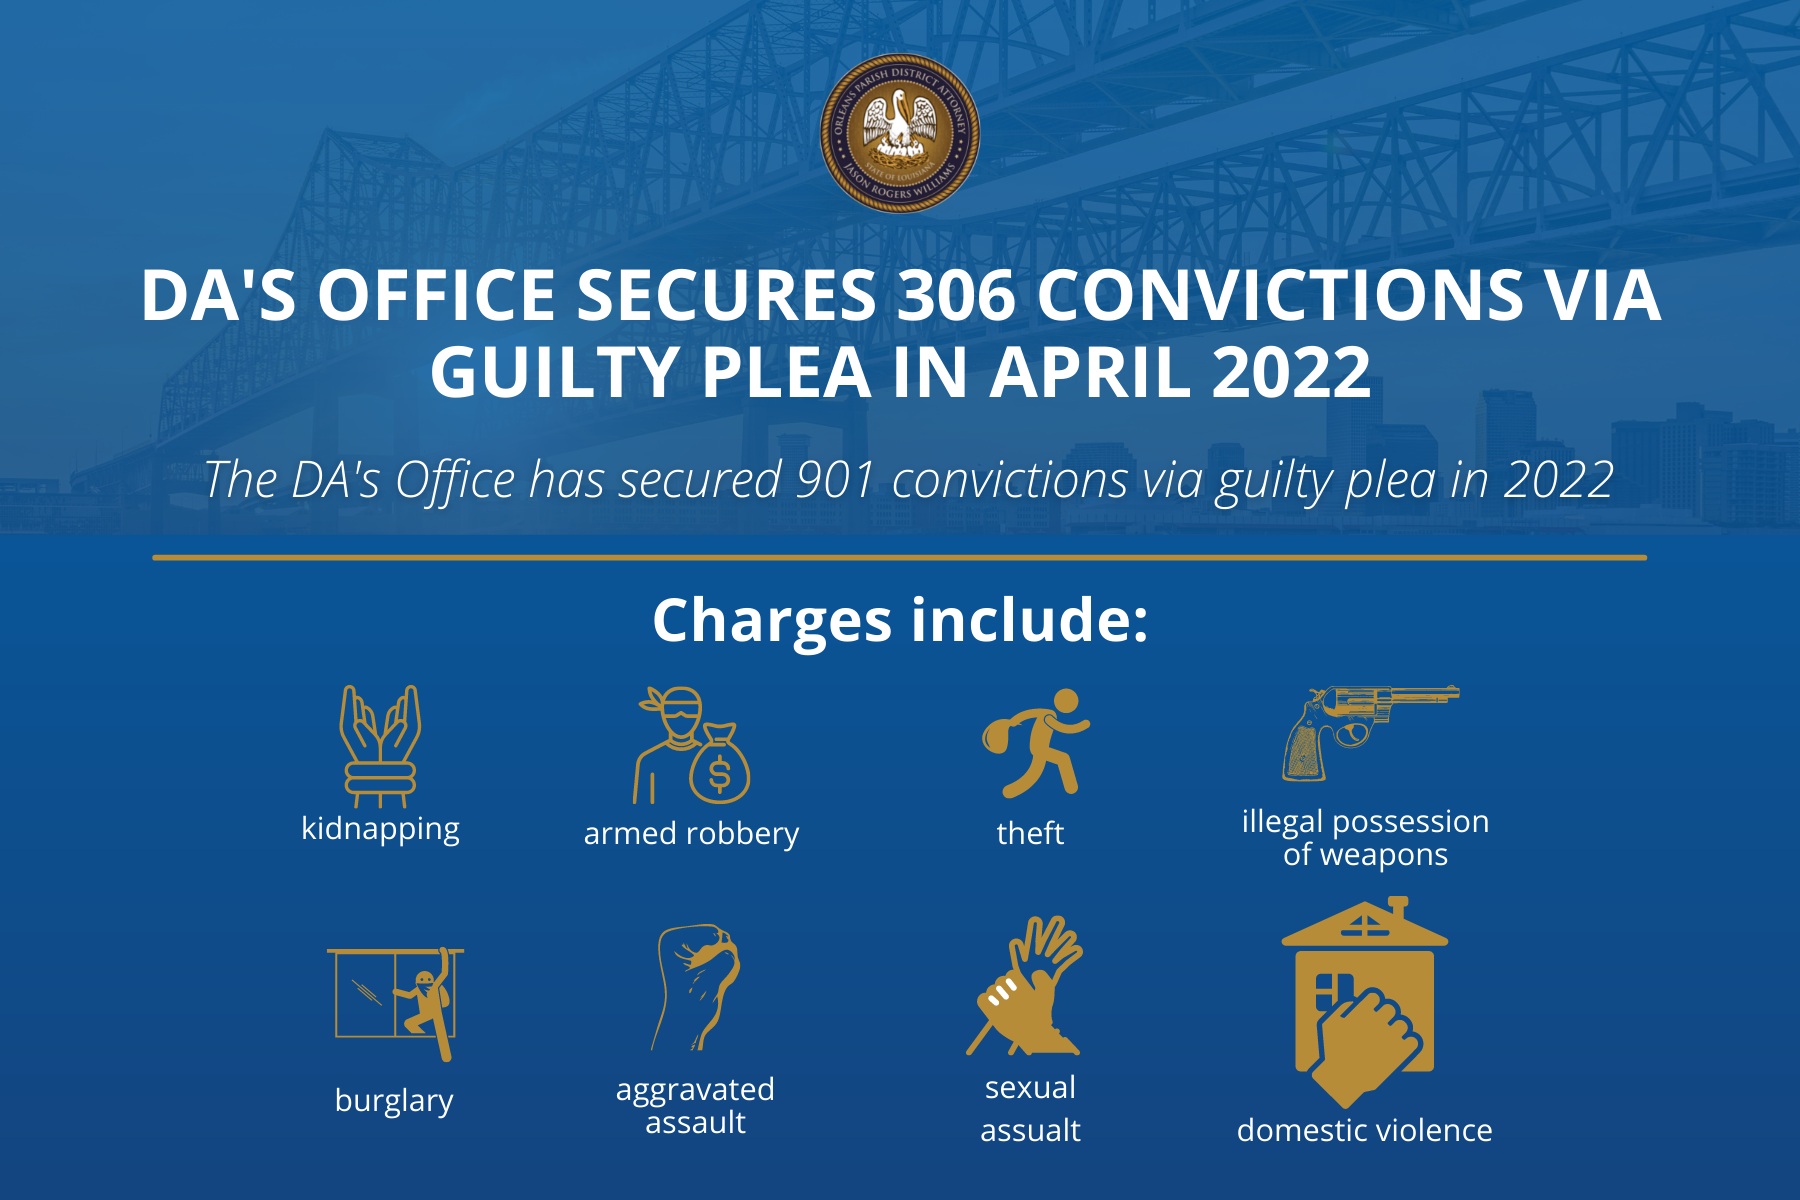 DA’s Office Secures 306 Convictions Via Guilty Plea in April 2022